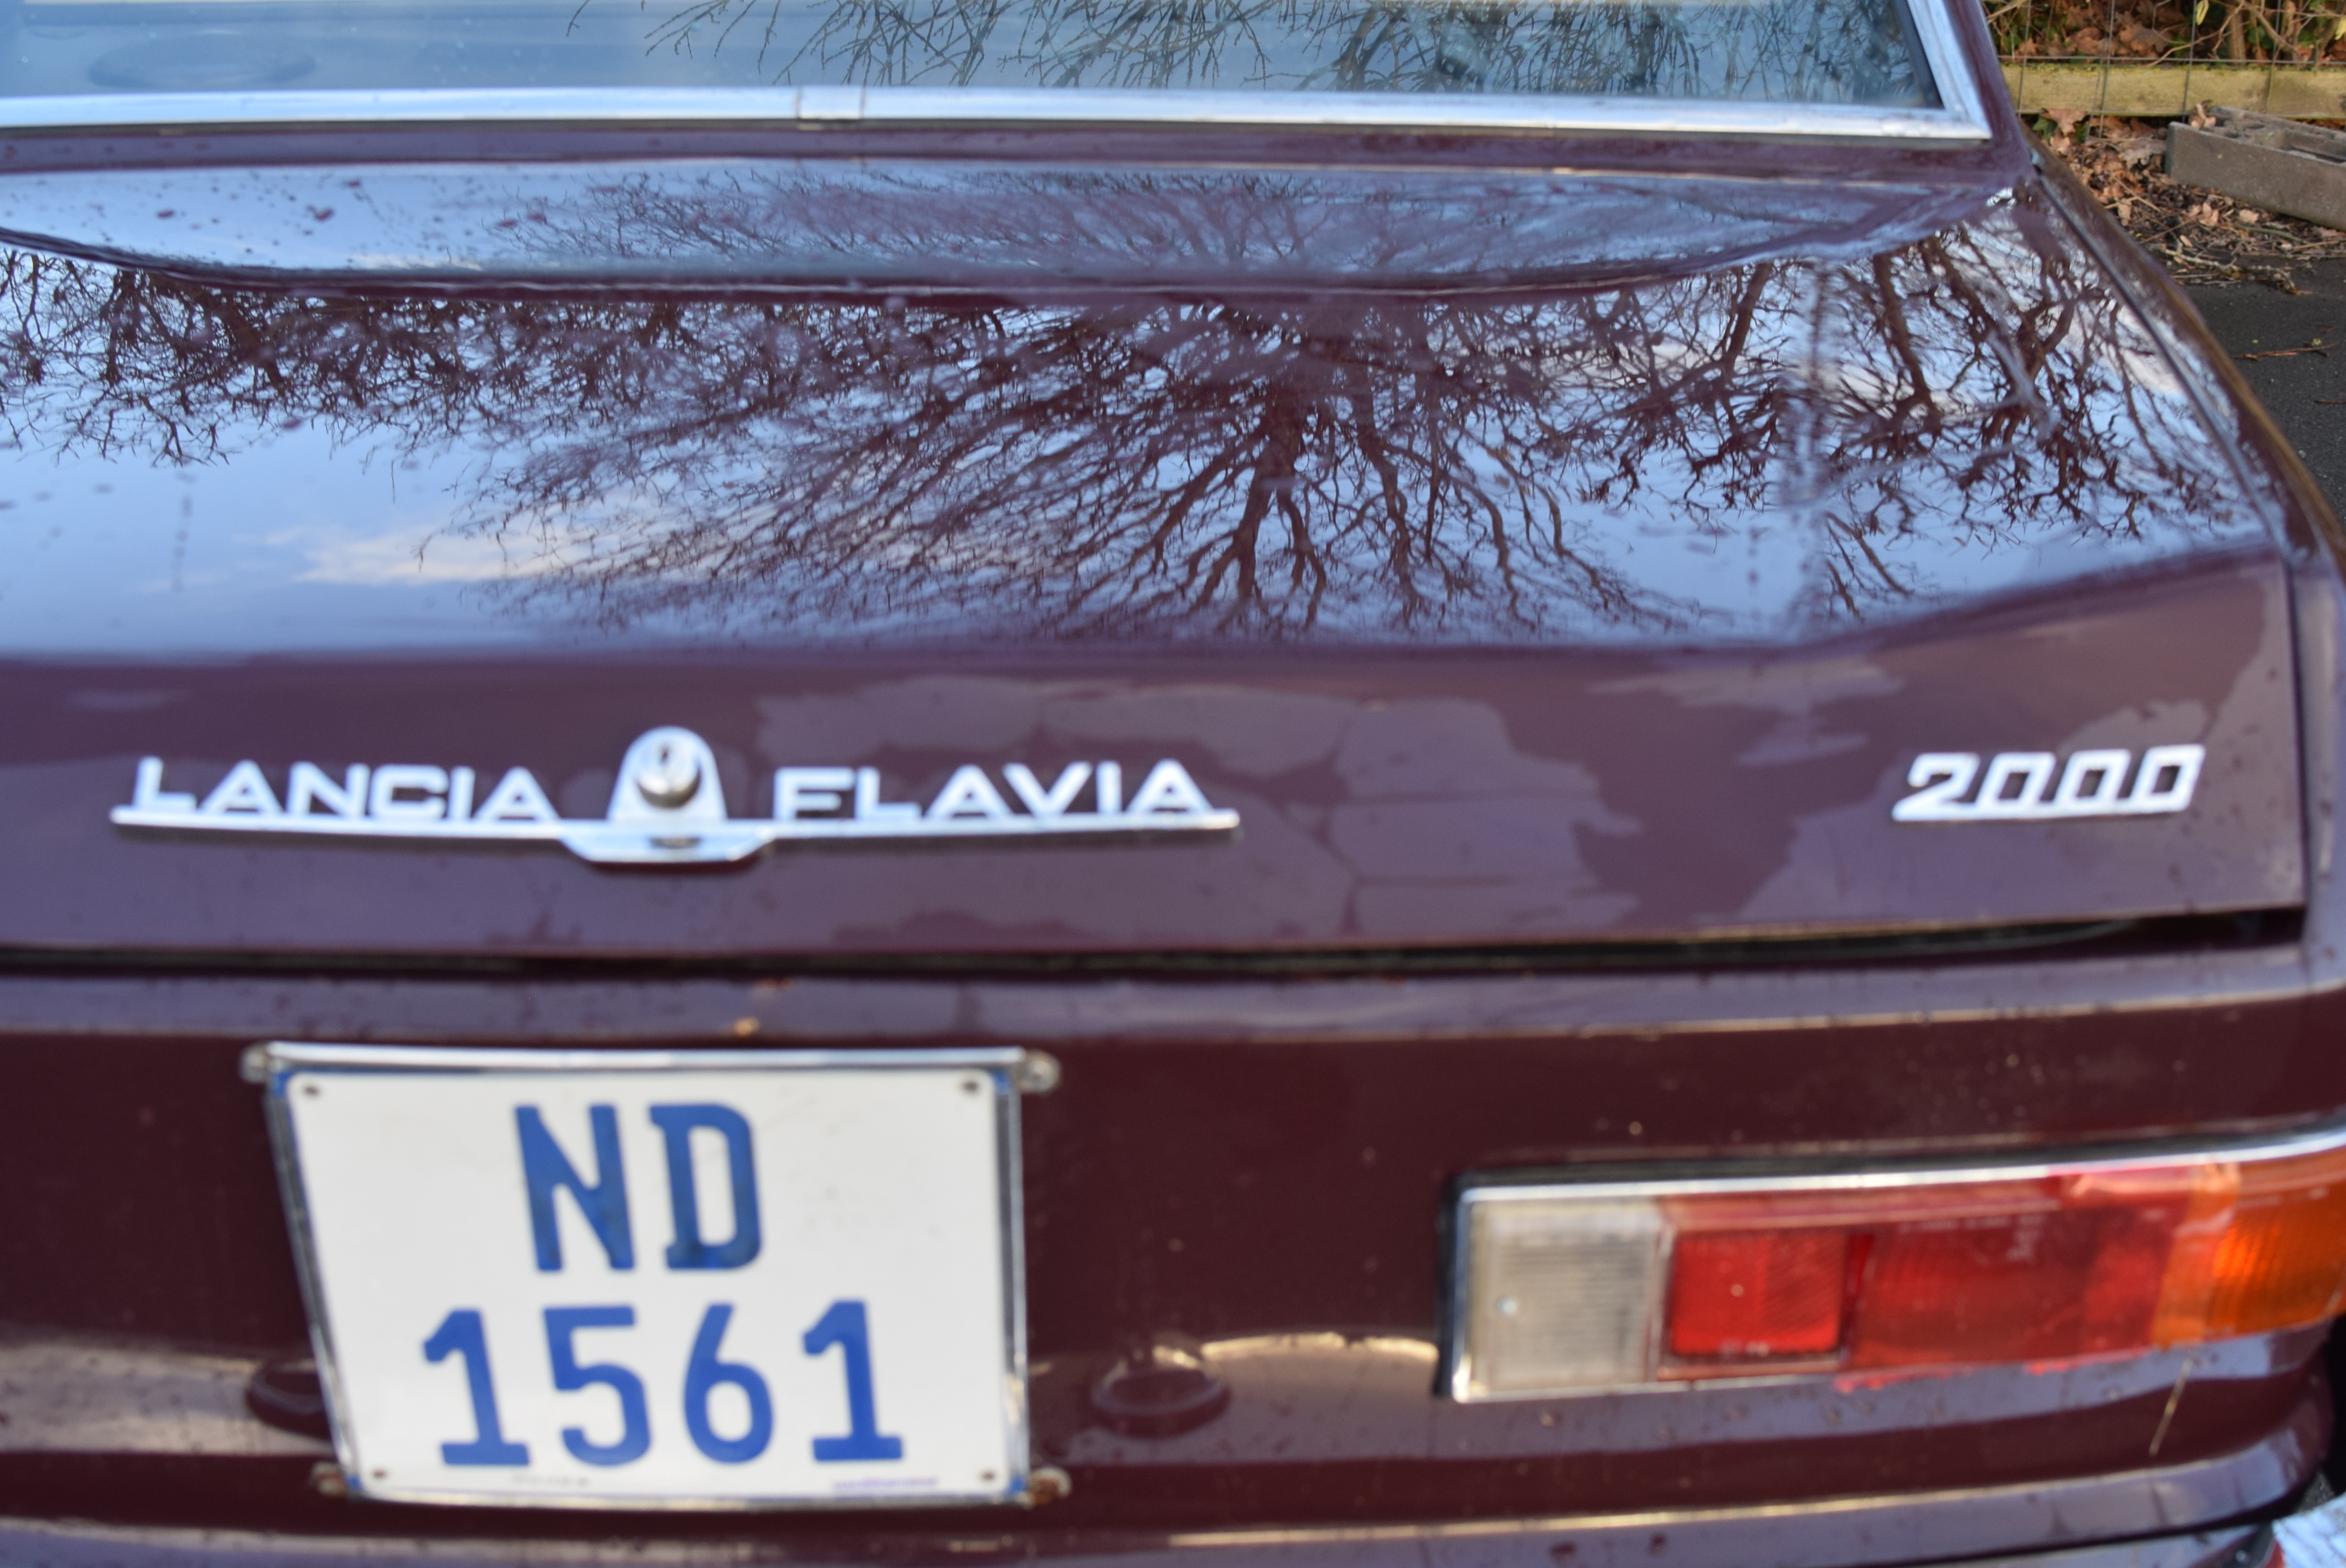 Lancia Flavia 2000 Coupe